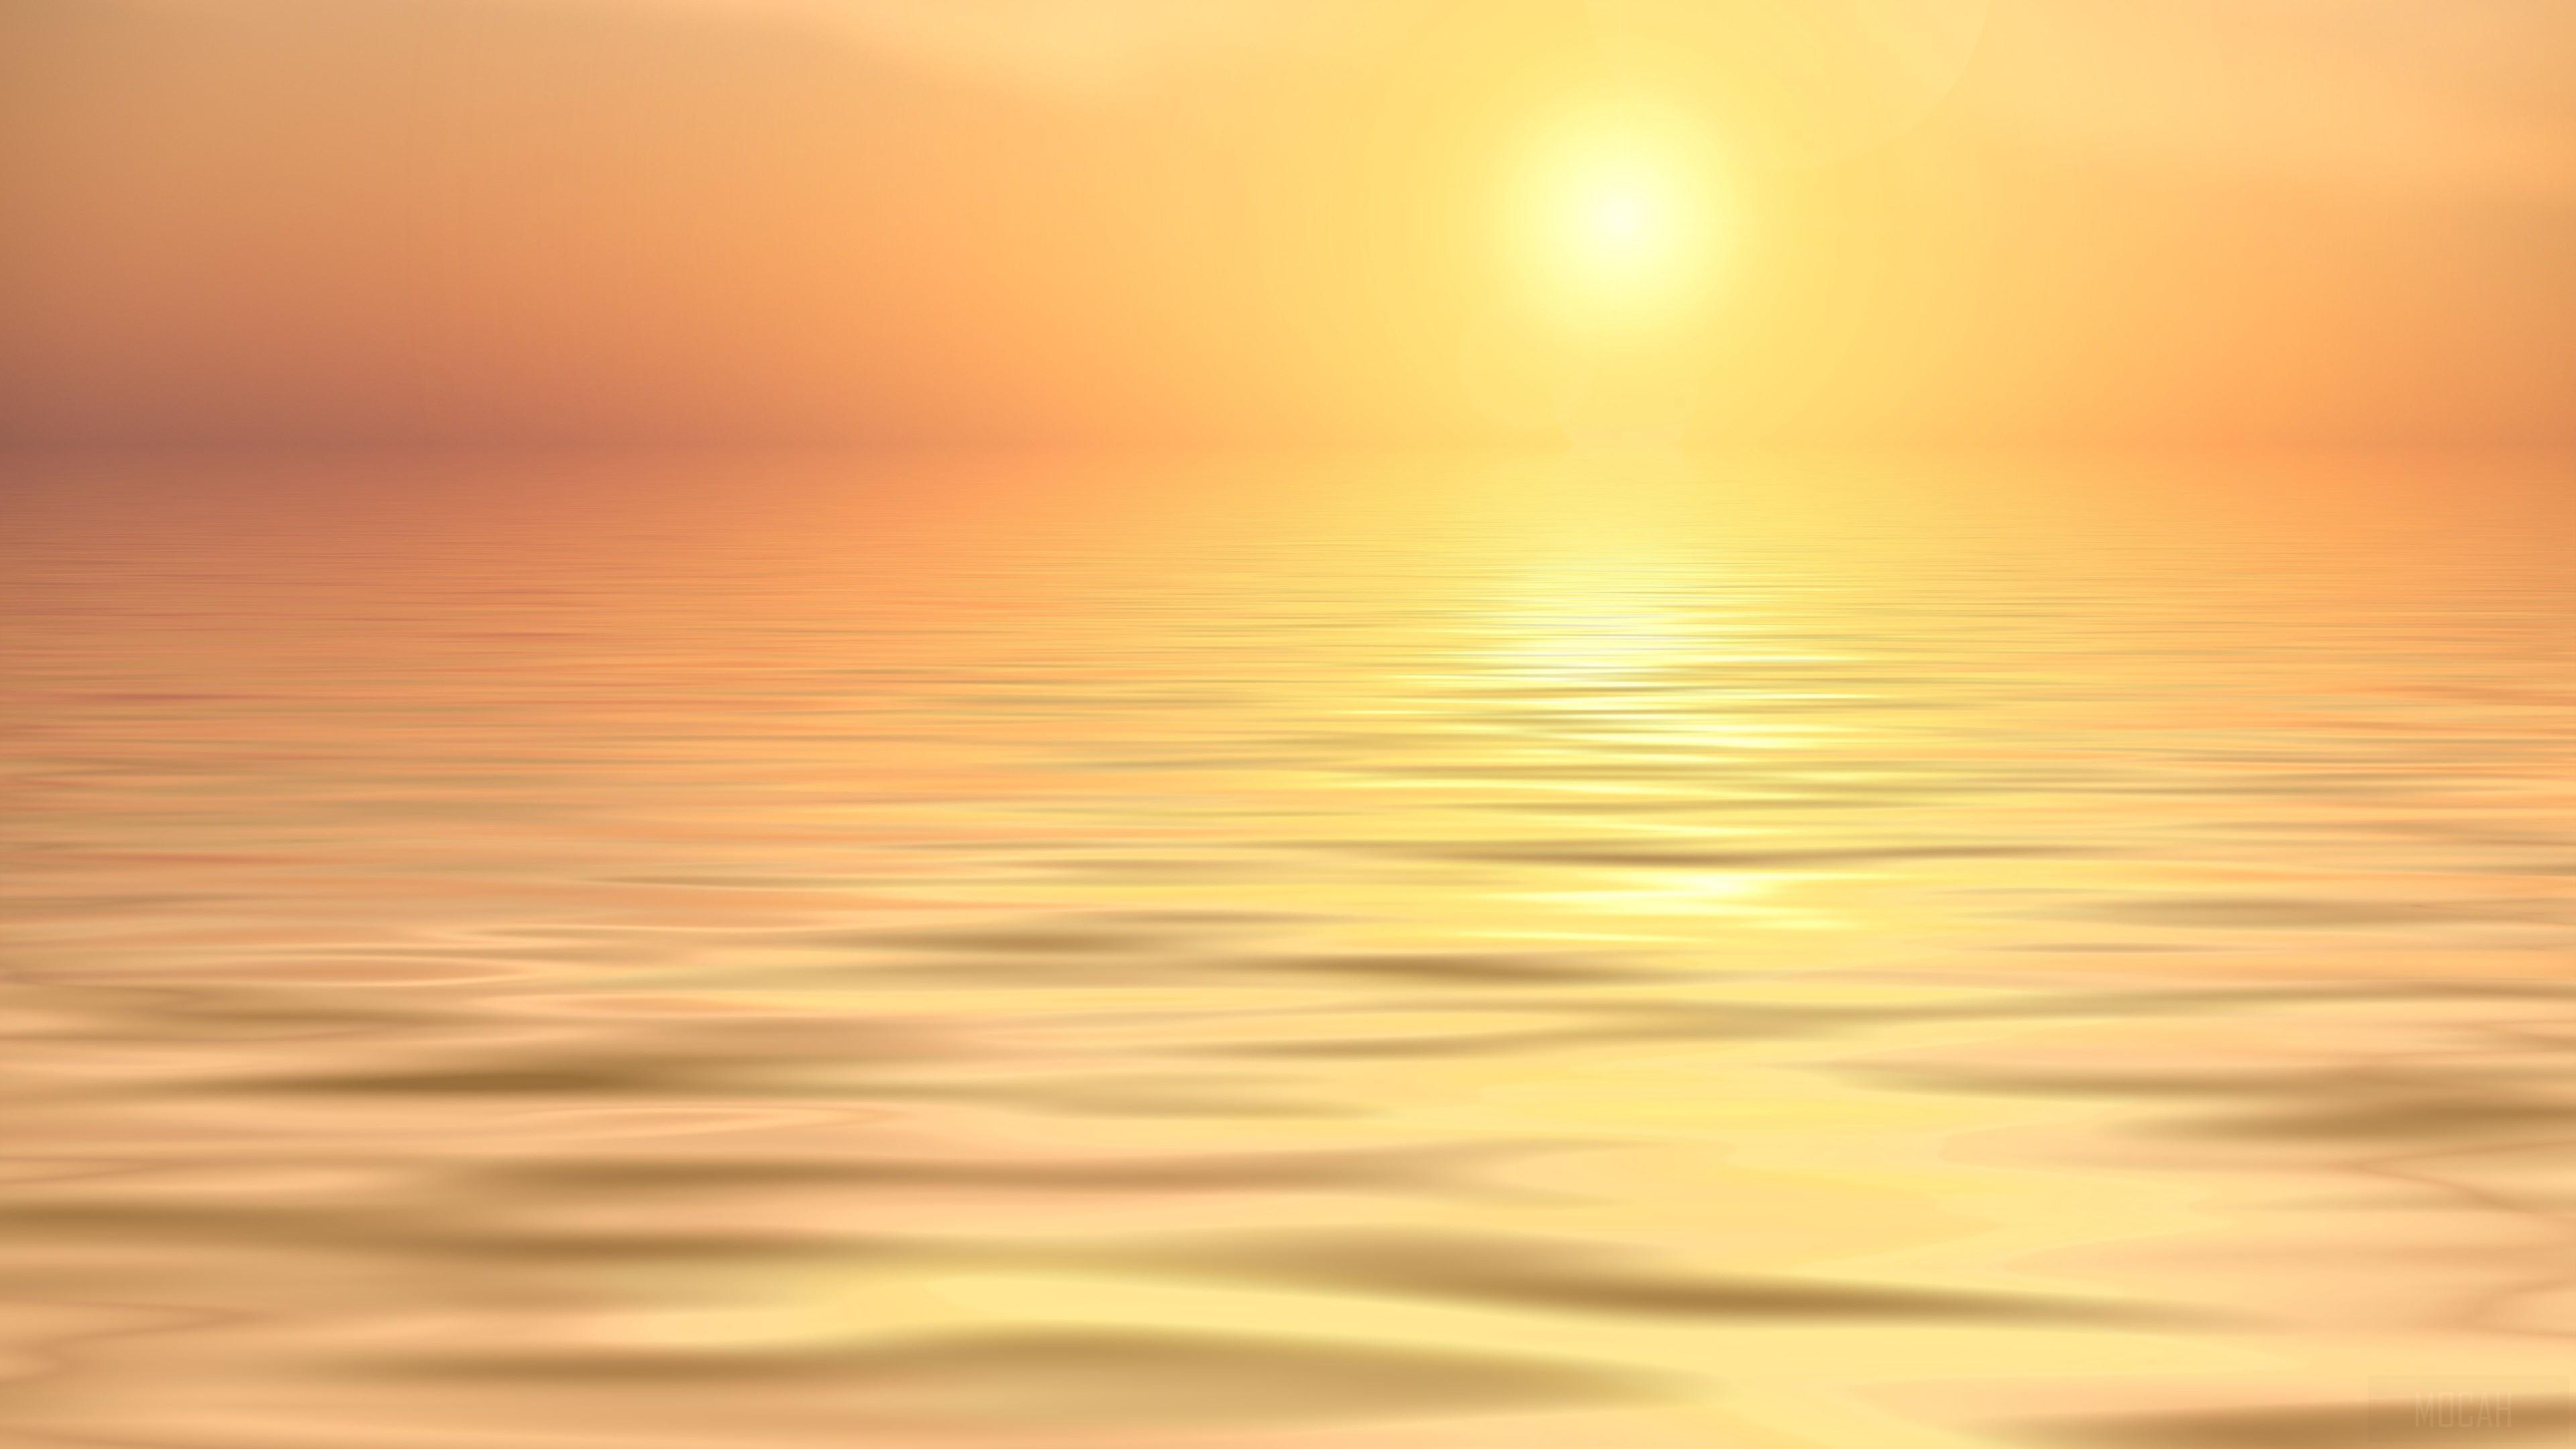 HD wallpaper, Abendstimmung Calm Sea Sunset 4K